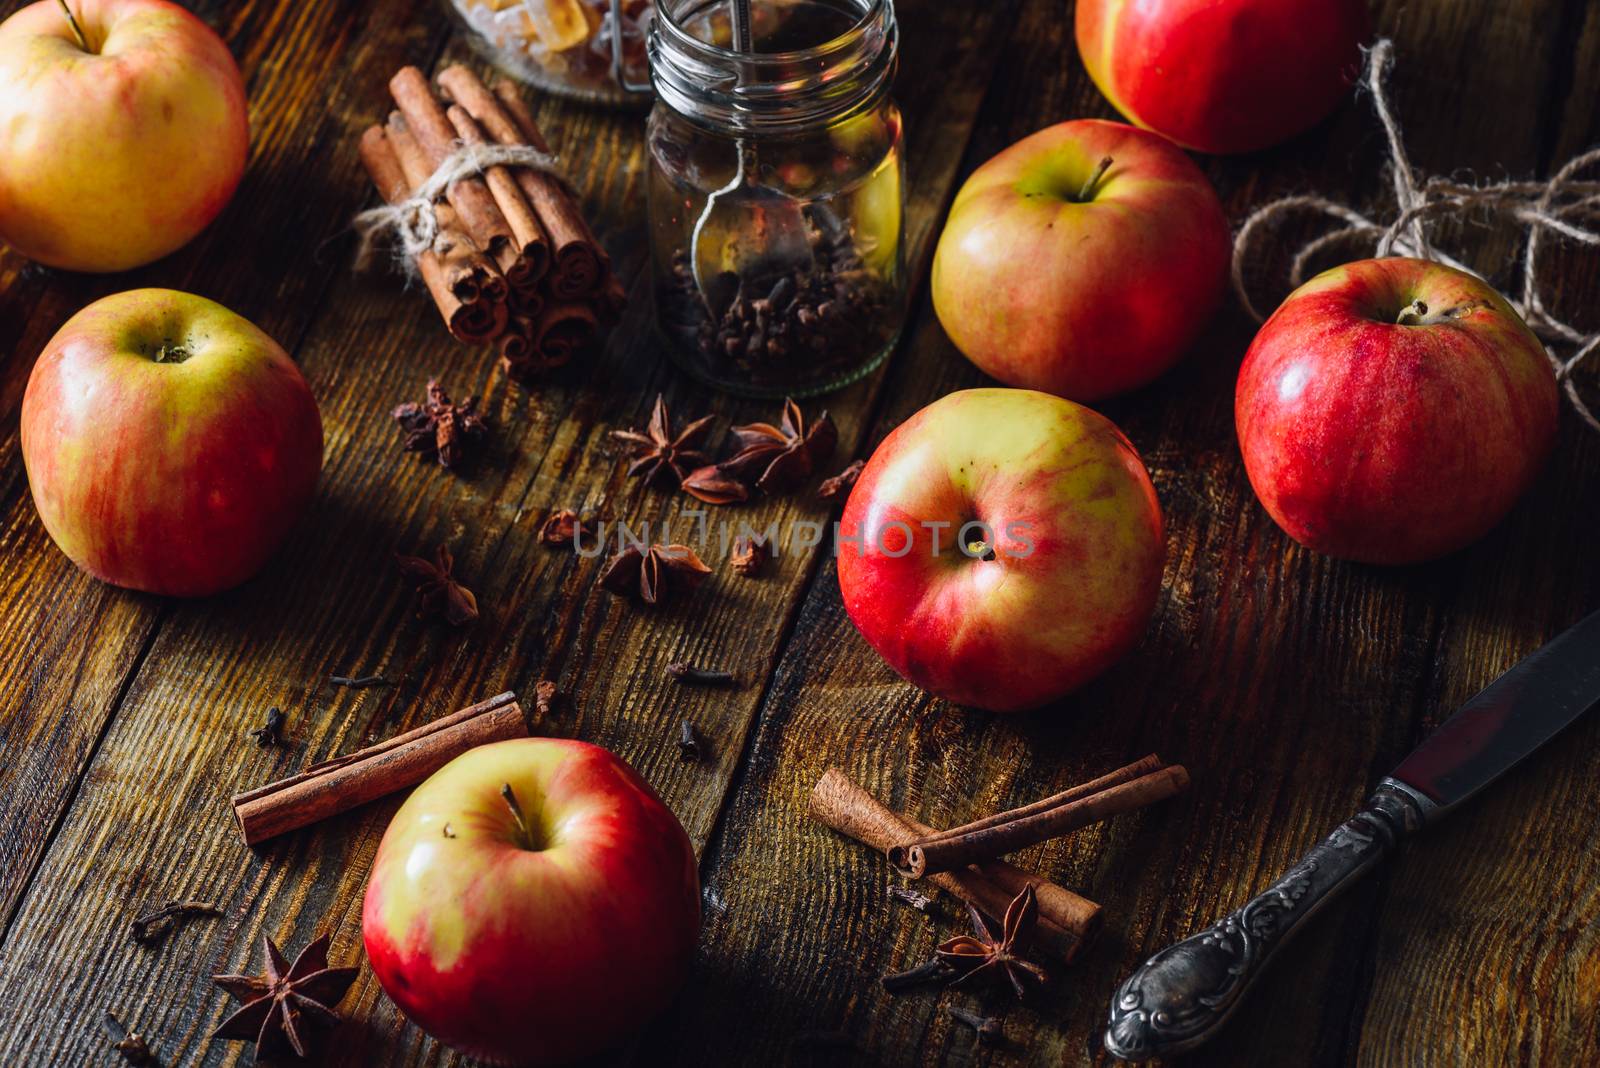 Apples with Clove, Cinnamon and Anise Star. by Seva_blsv